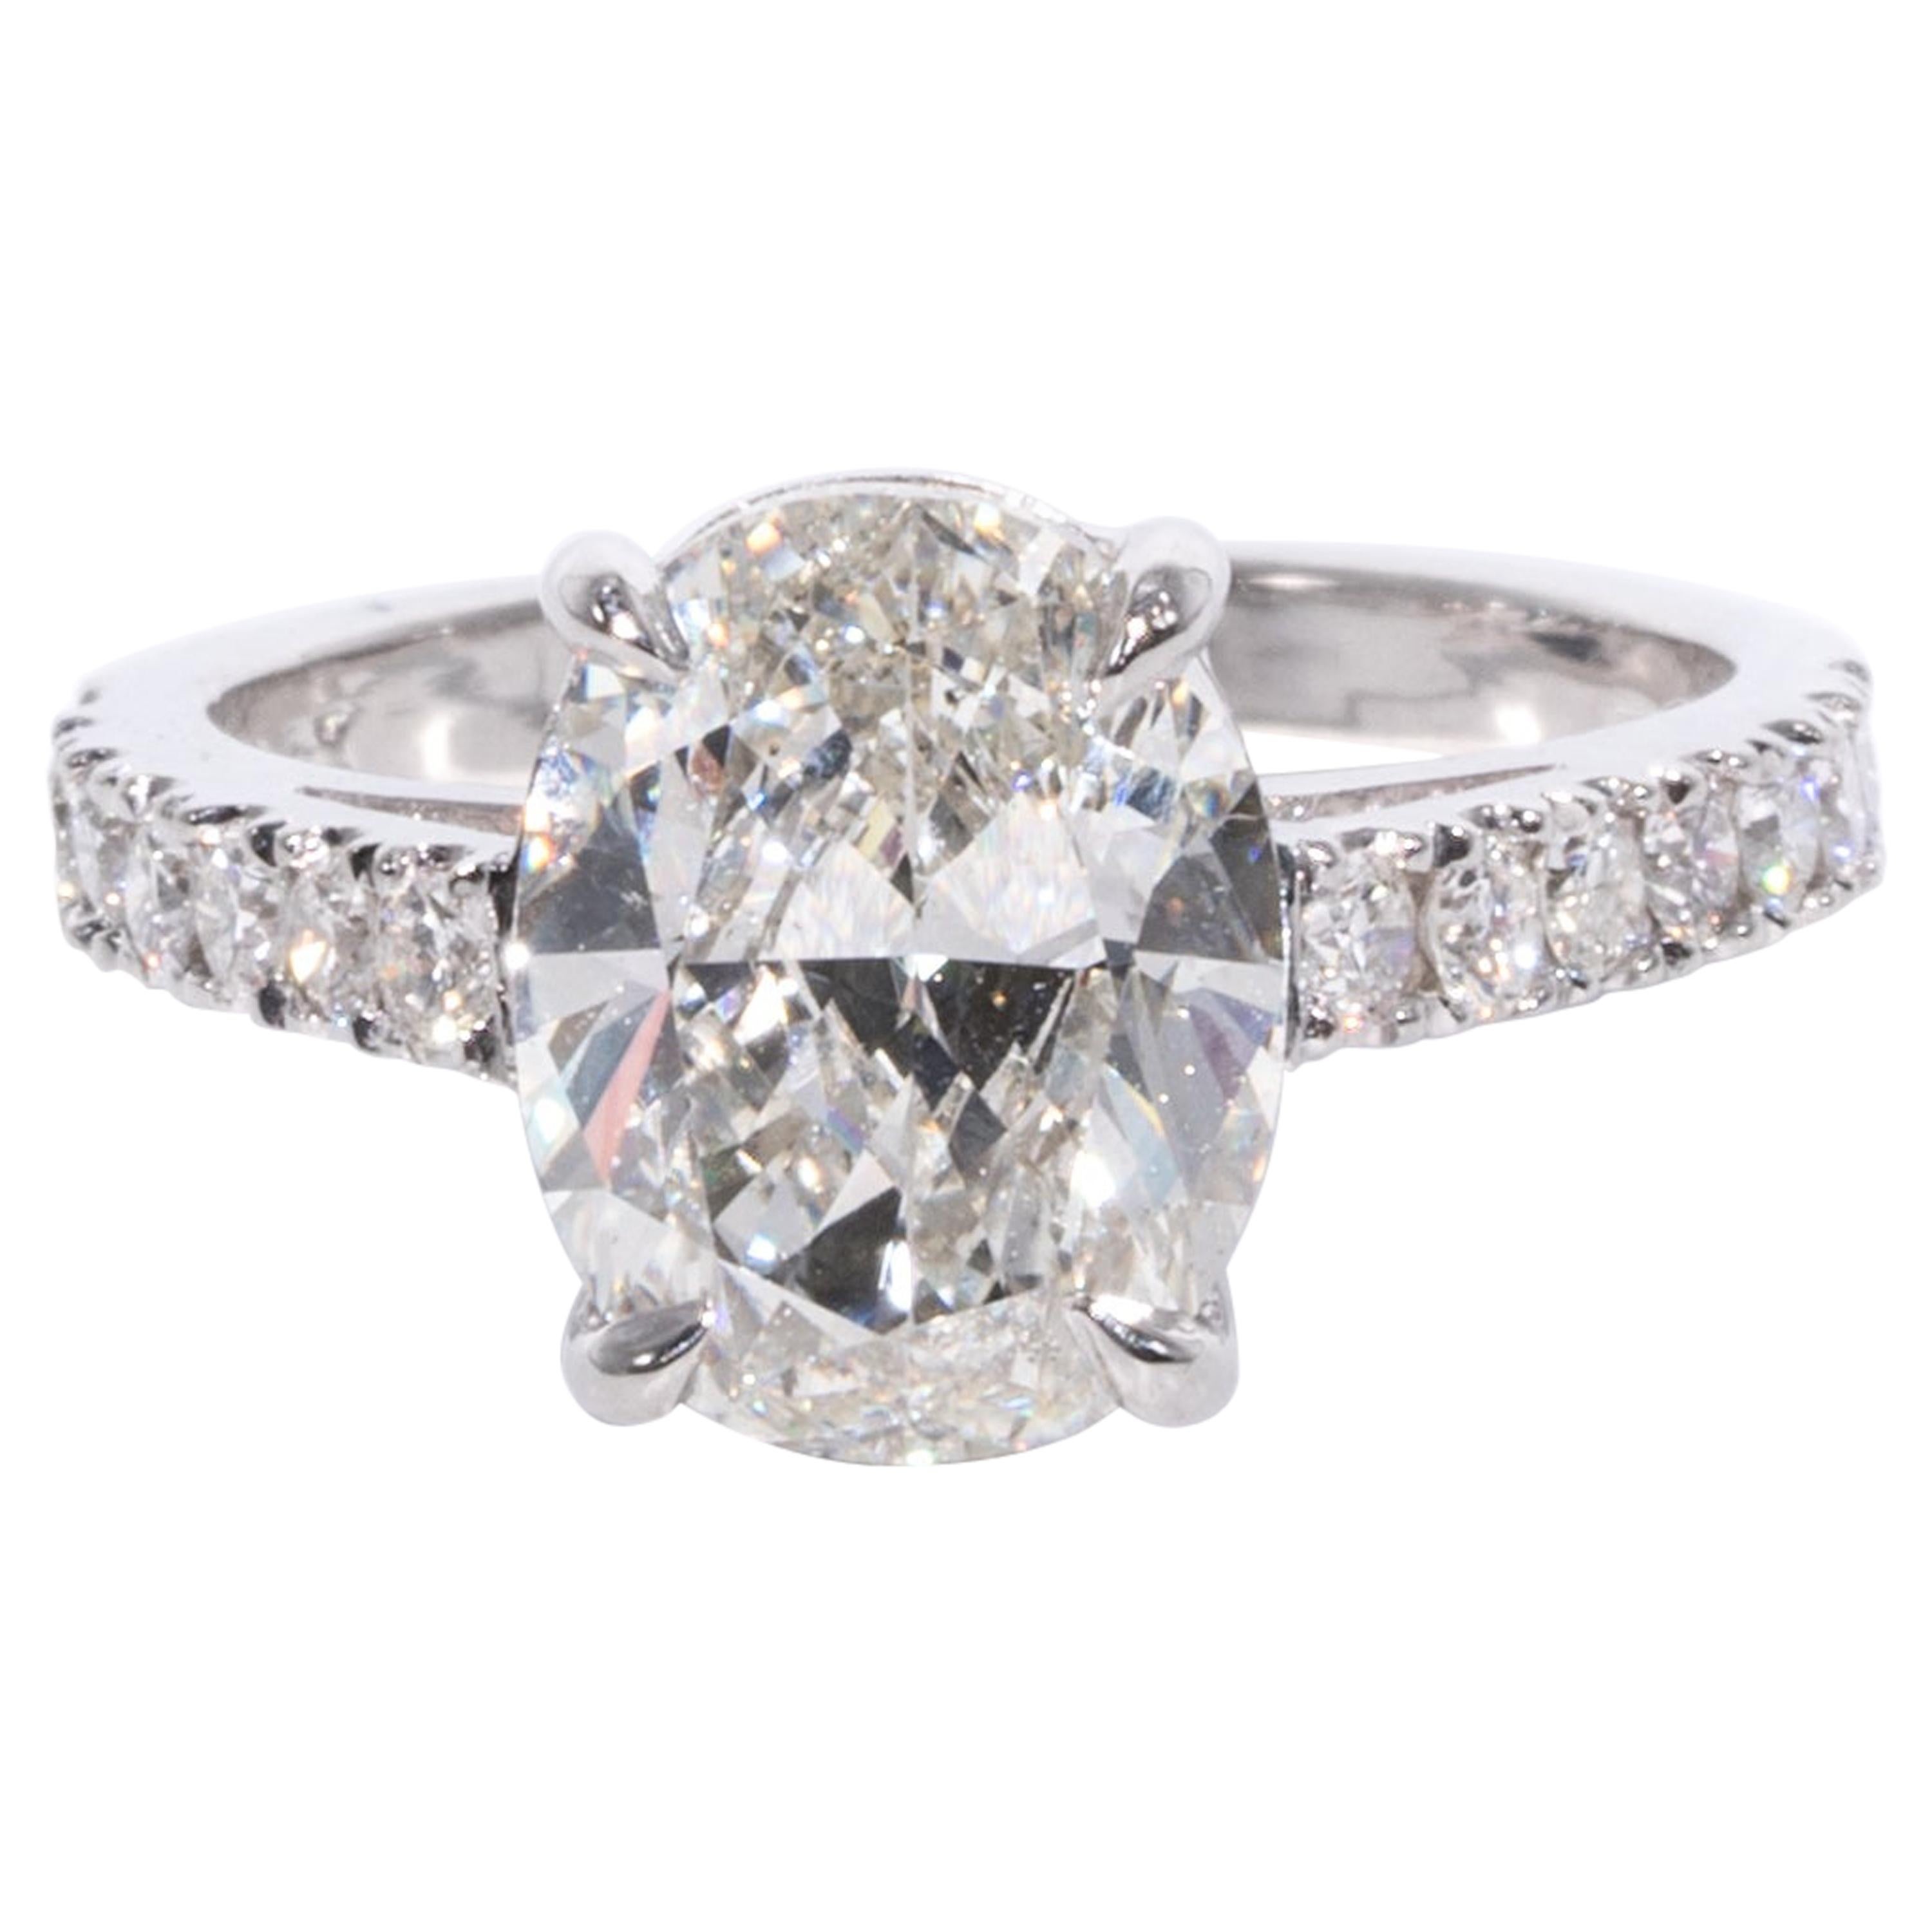 3.01 Carat Oval Cut Diamond Engagement Ring, in 18 Karat